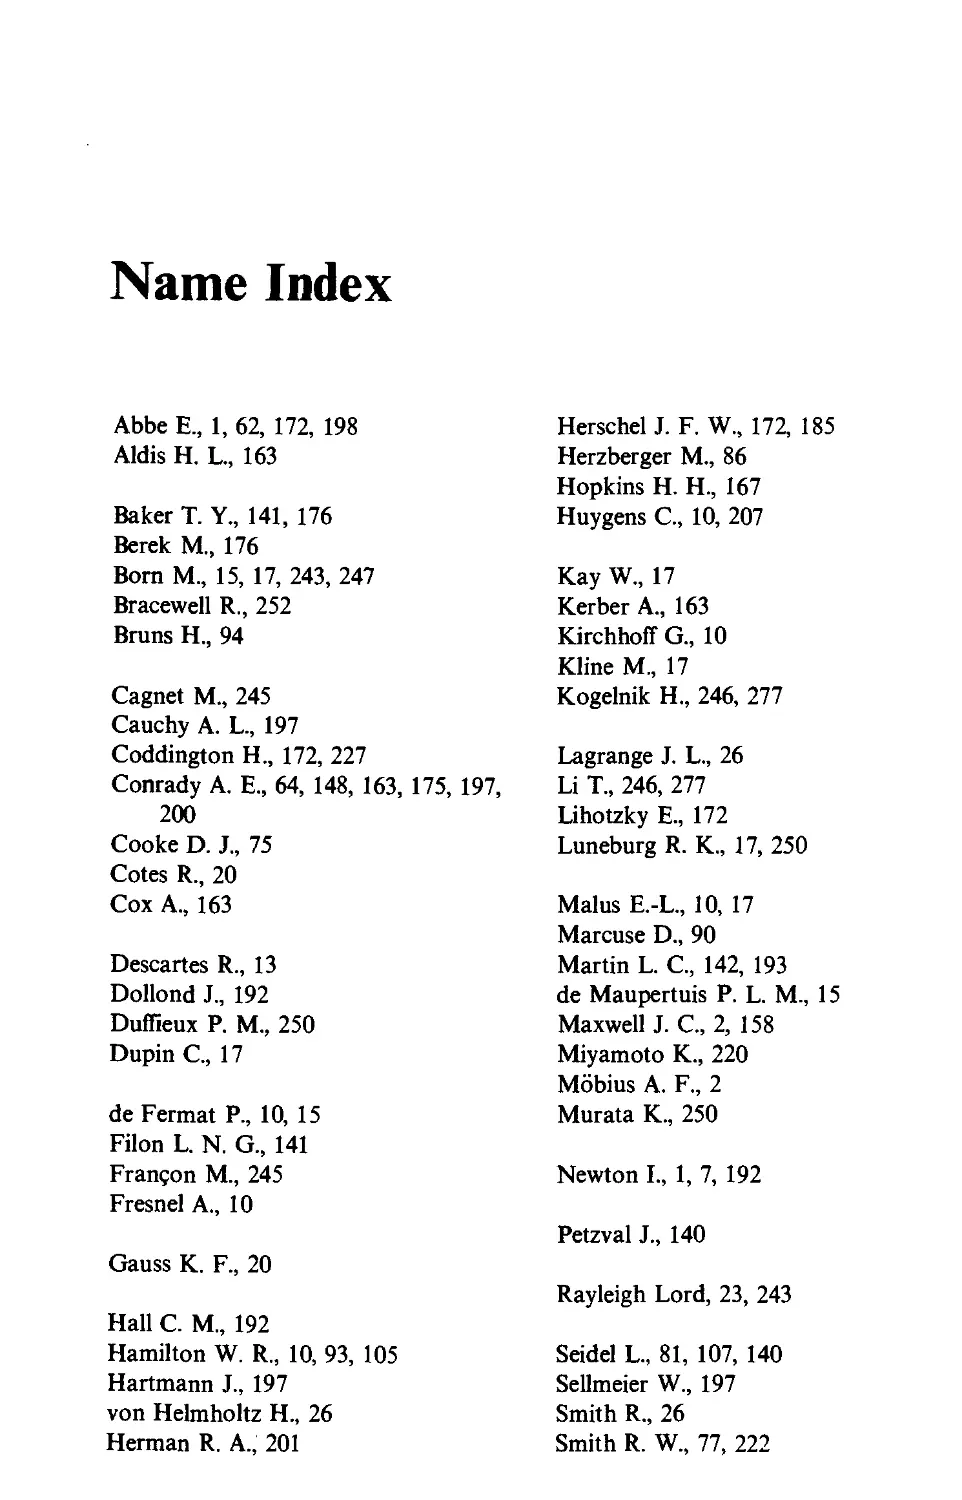 Name index